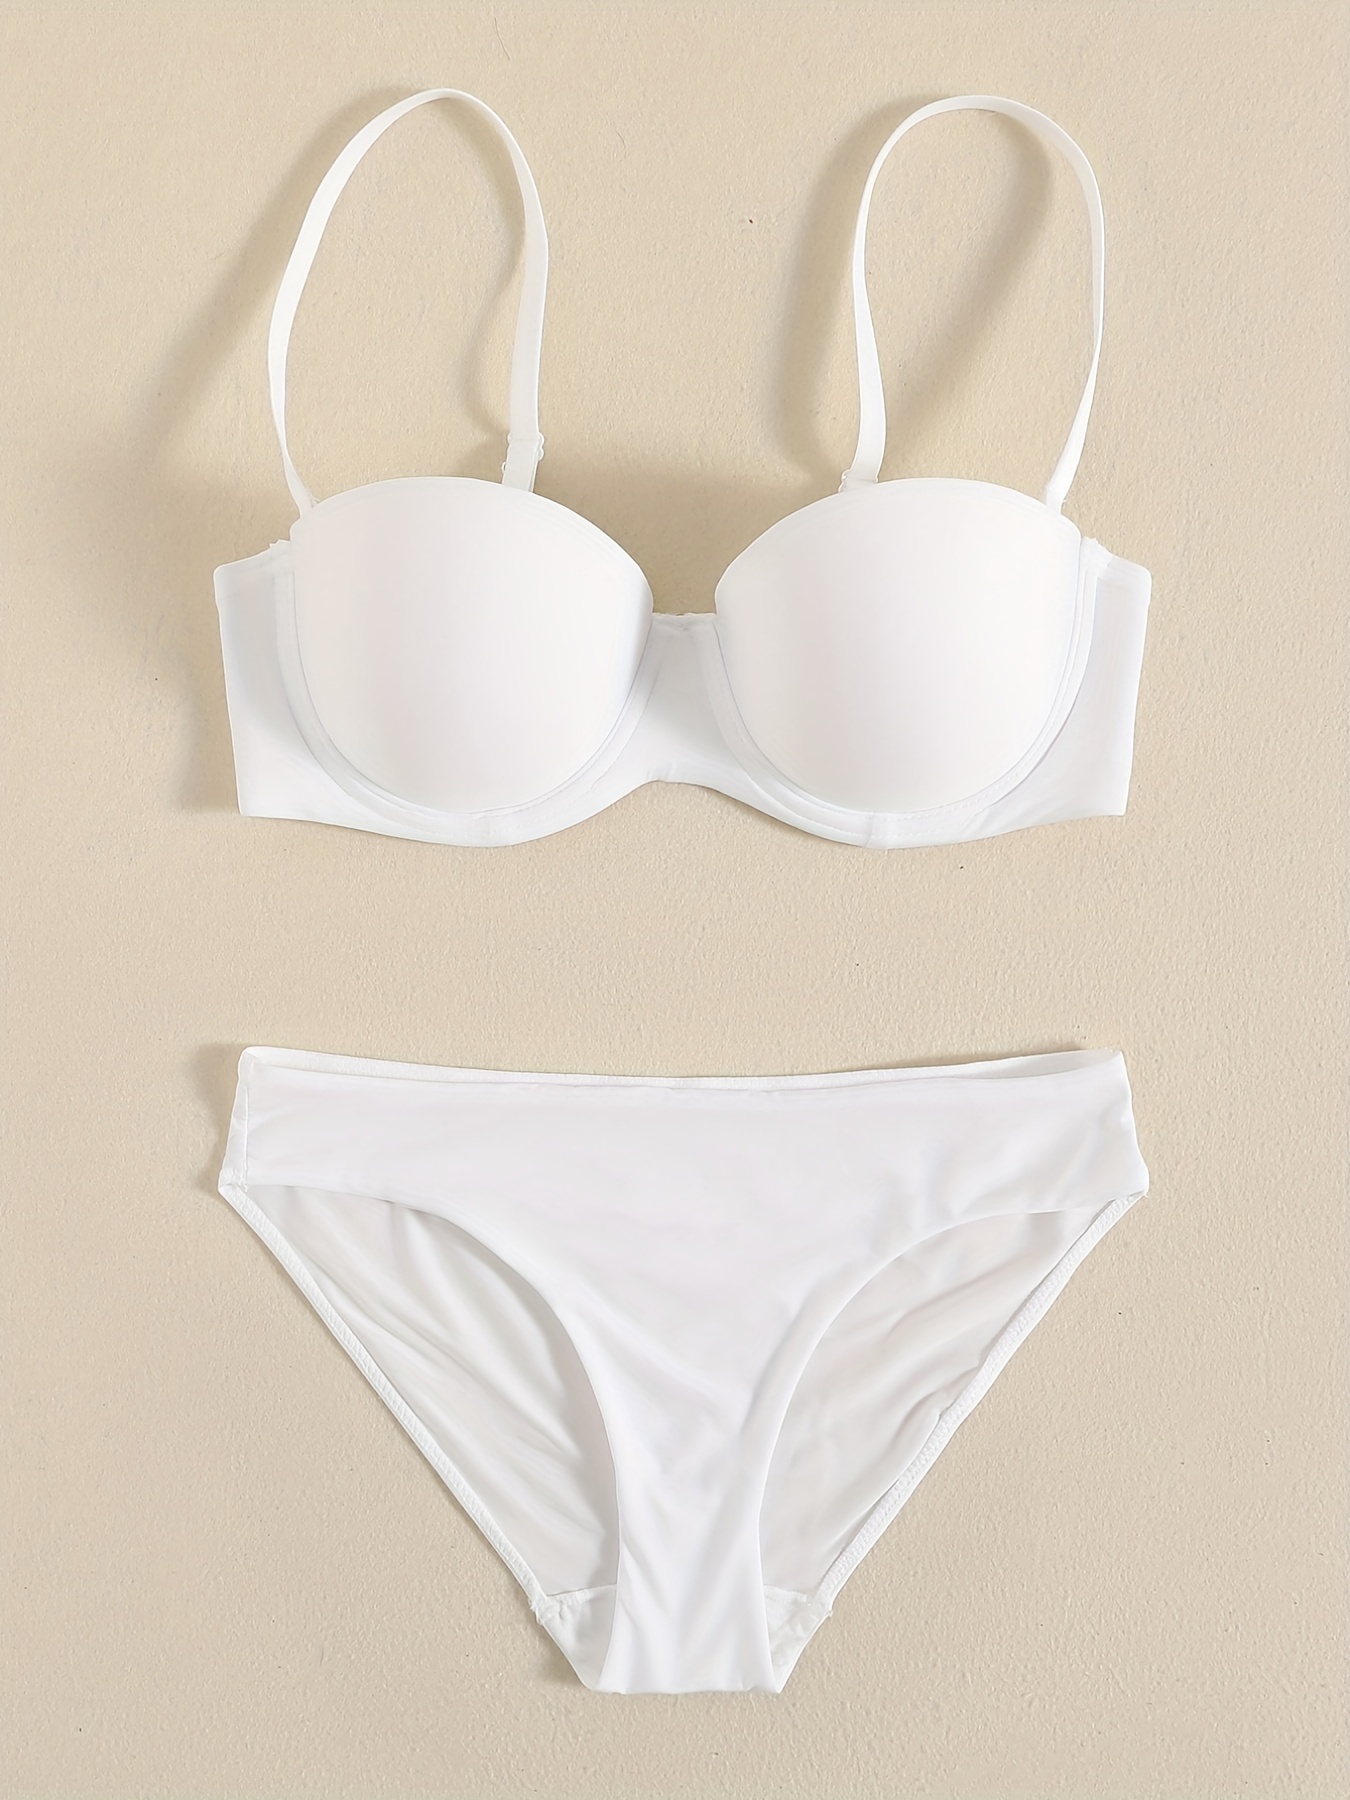 White Seamless Underwear Sets, Seamless Lingerie